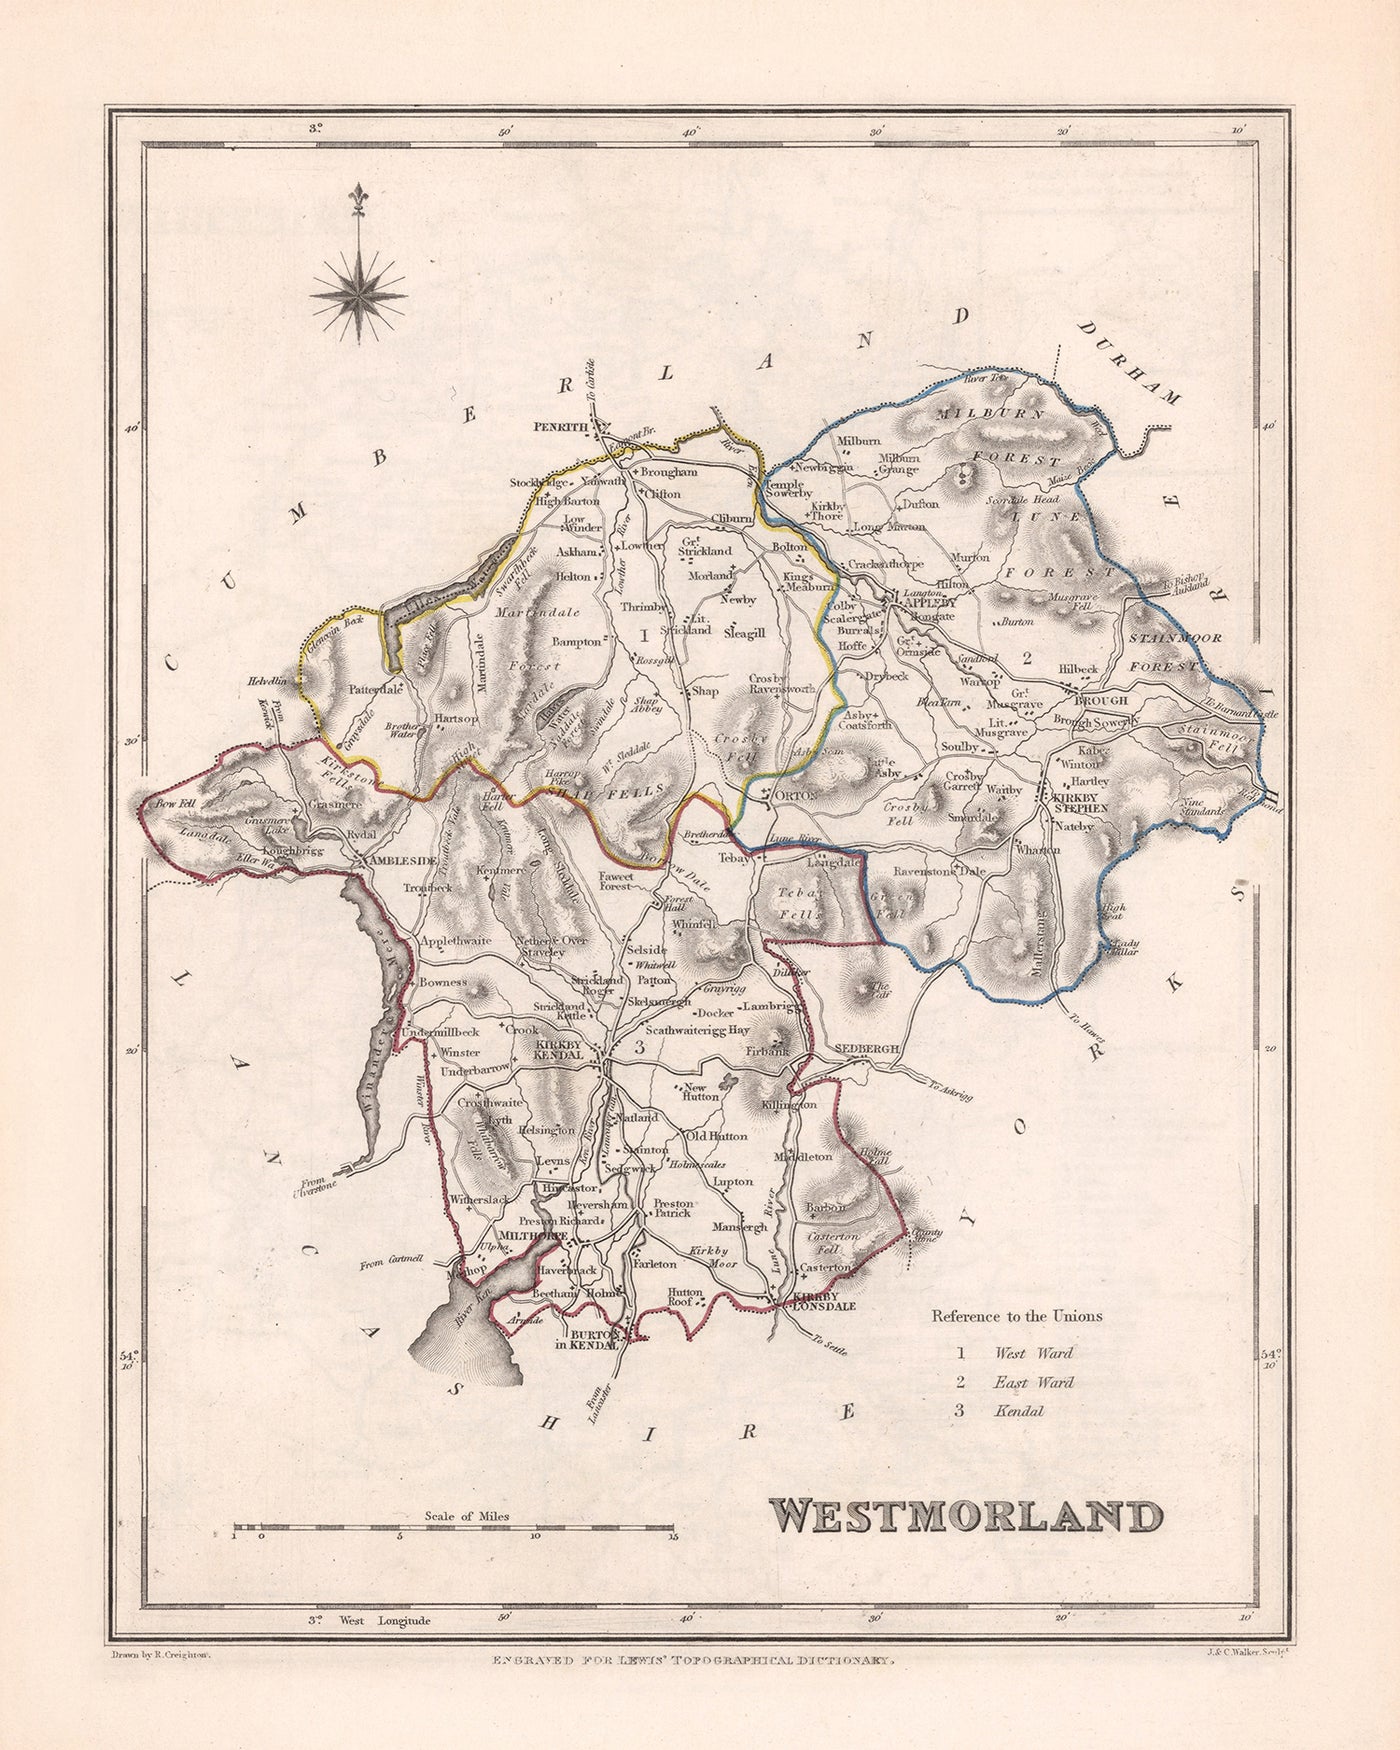 Ancienne carte de Westmorland par Samuel Lewis, 1844 : Appleby, Kendal, Kirkby Stephen, Brough, Lake District